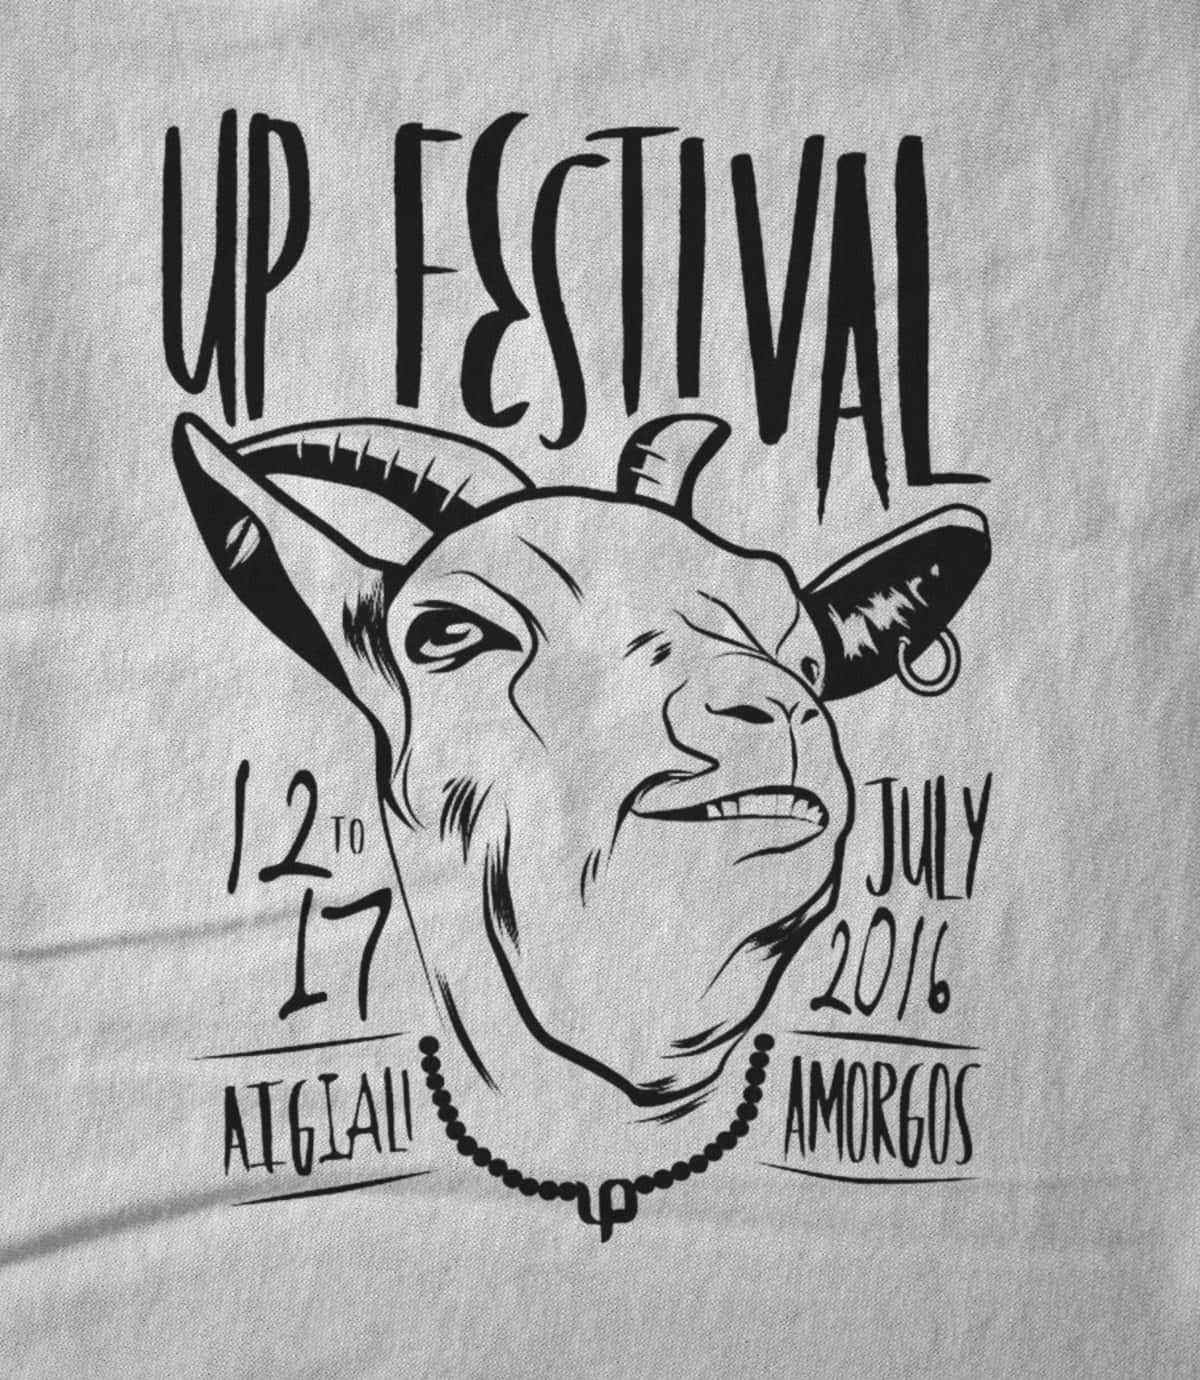 Up Festival